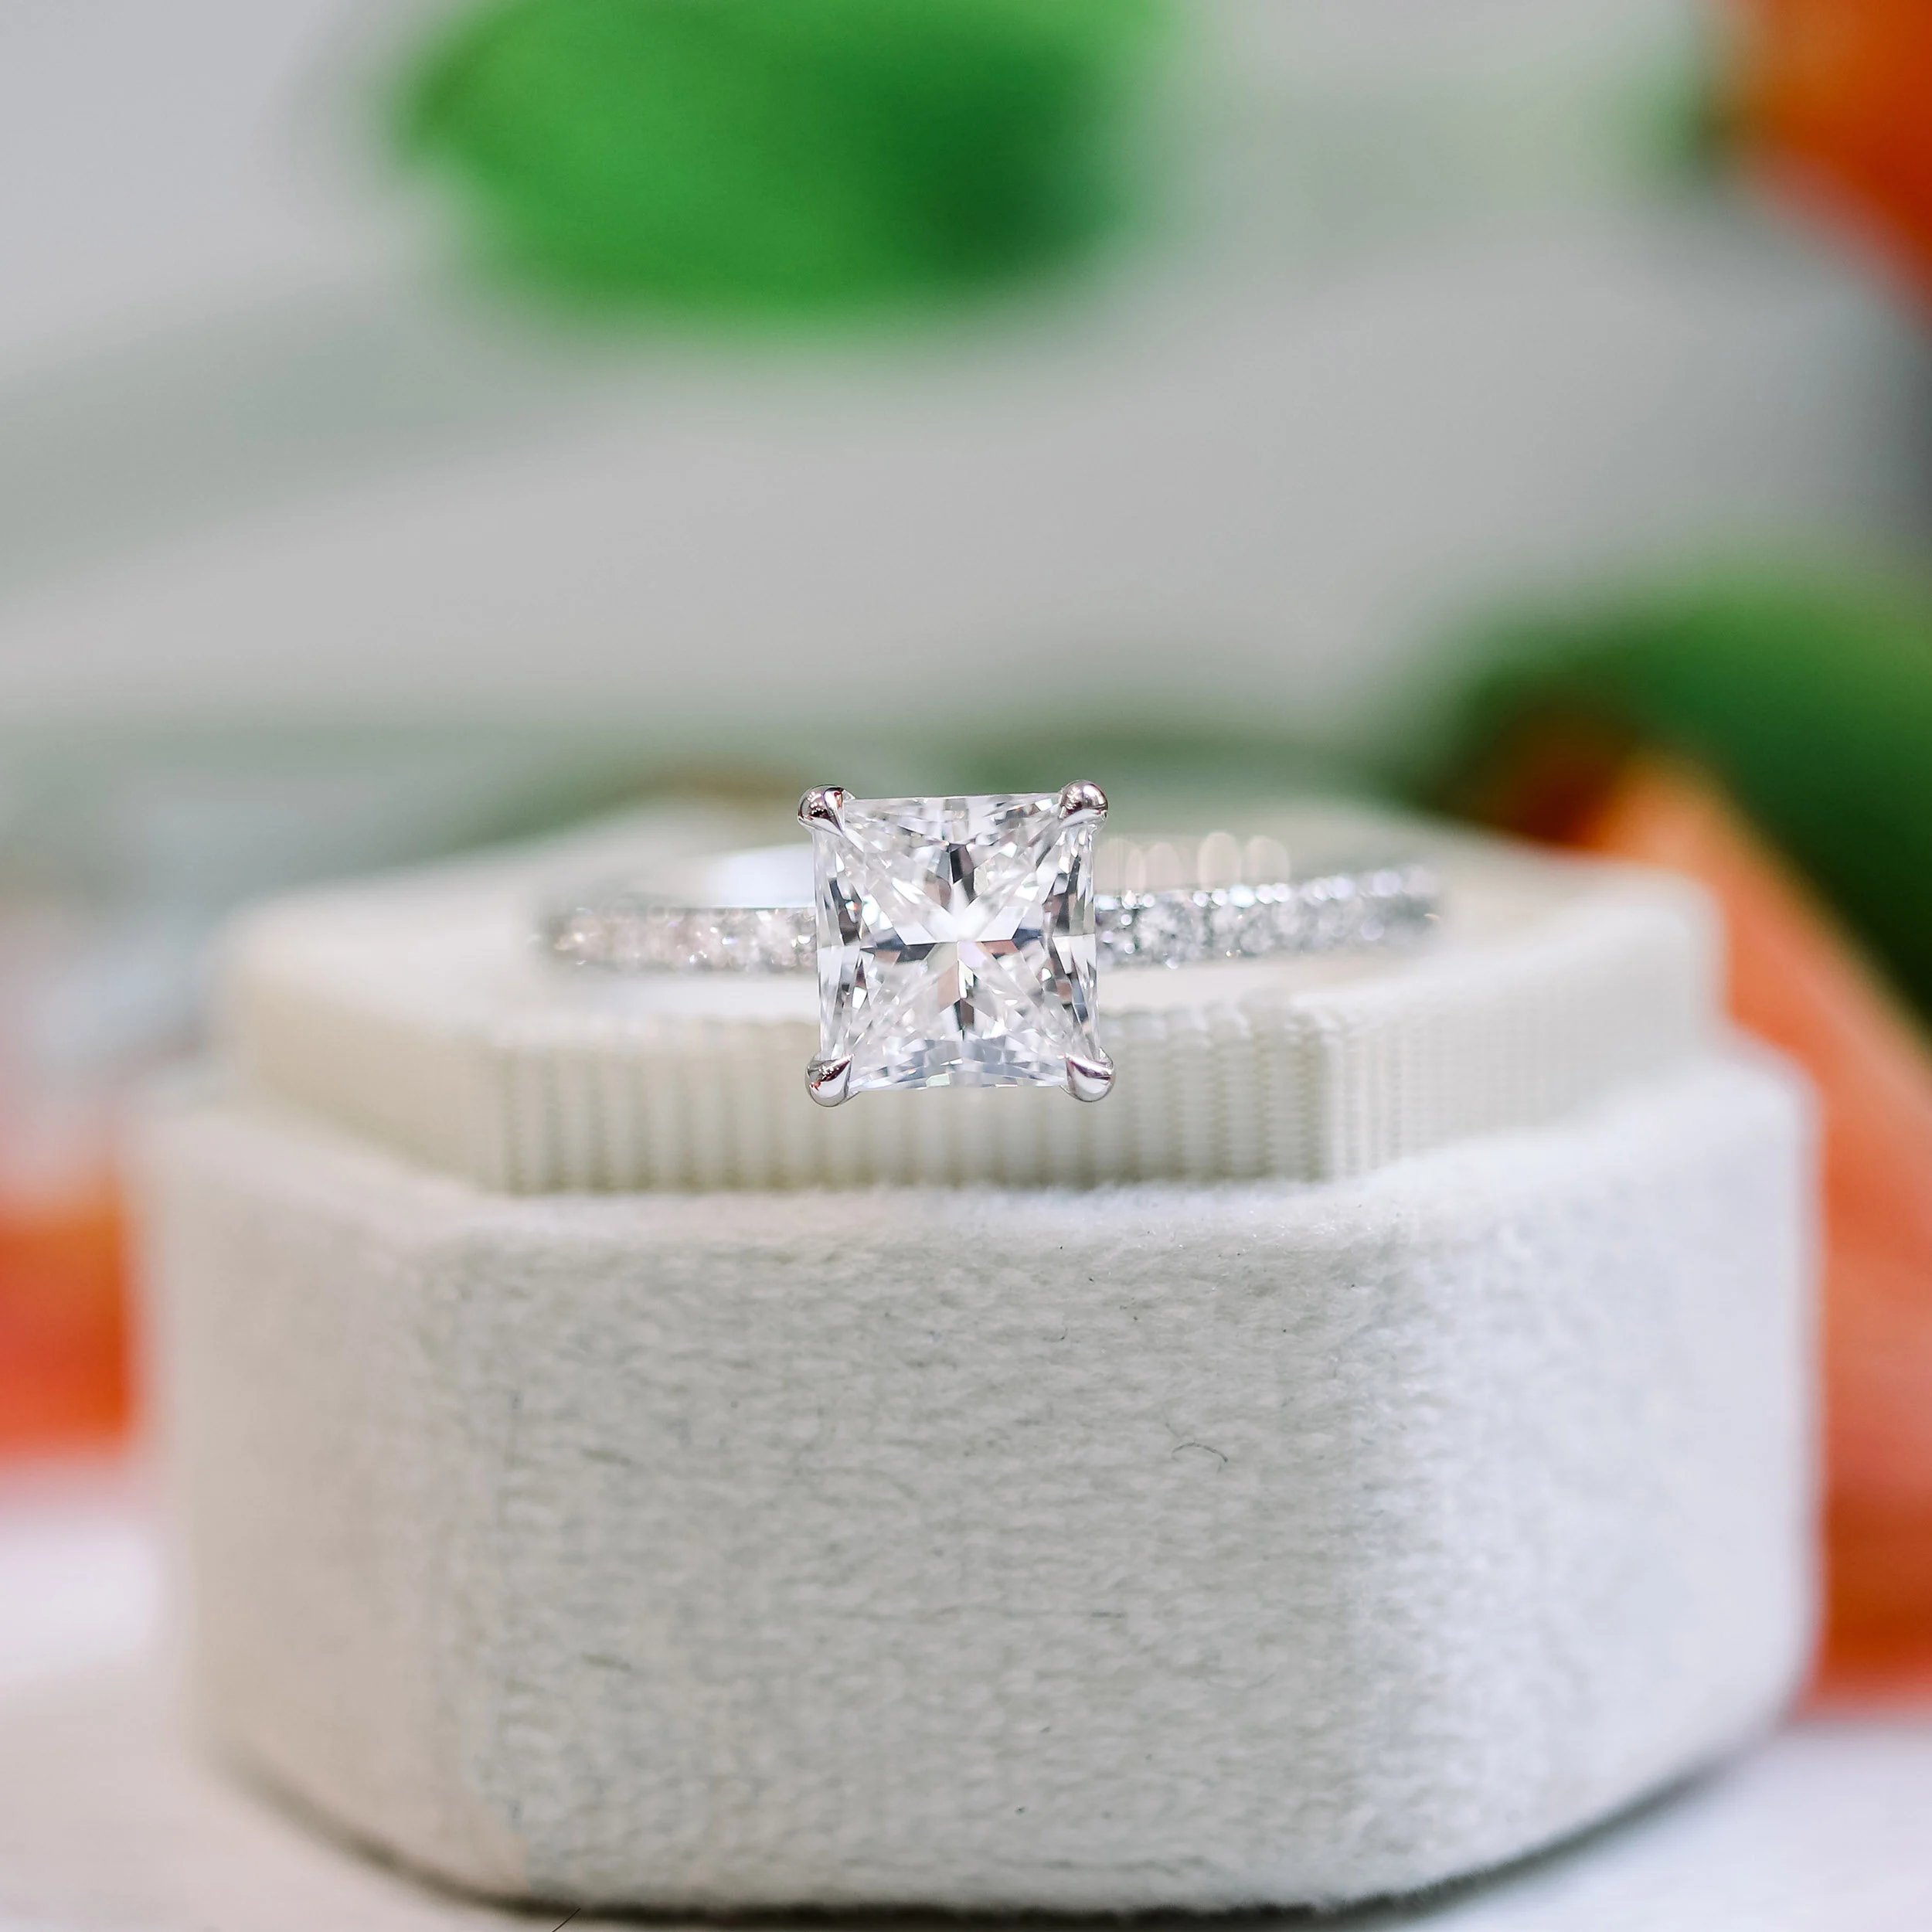 White Gold 2ct Princess Cut Lab Diamond Engagement Ring with Diamonds on the Band Ada Diamonds Design AD-150 Artistic